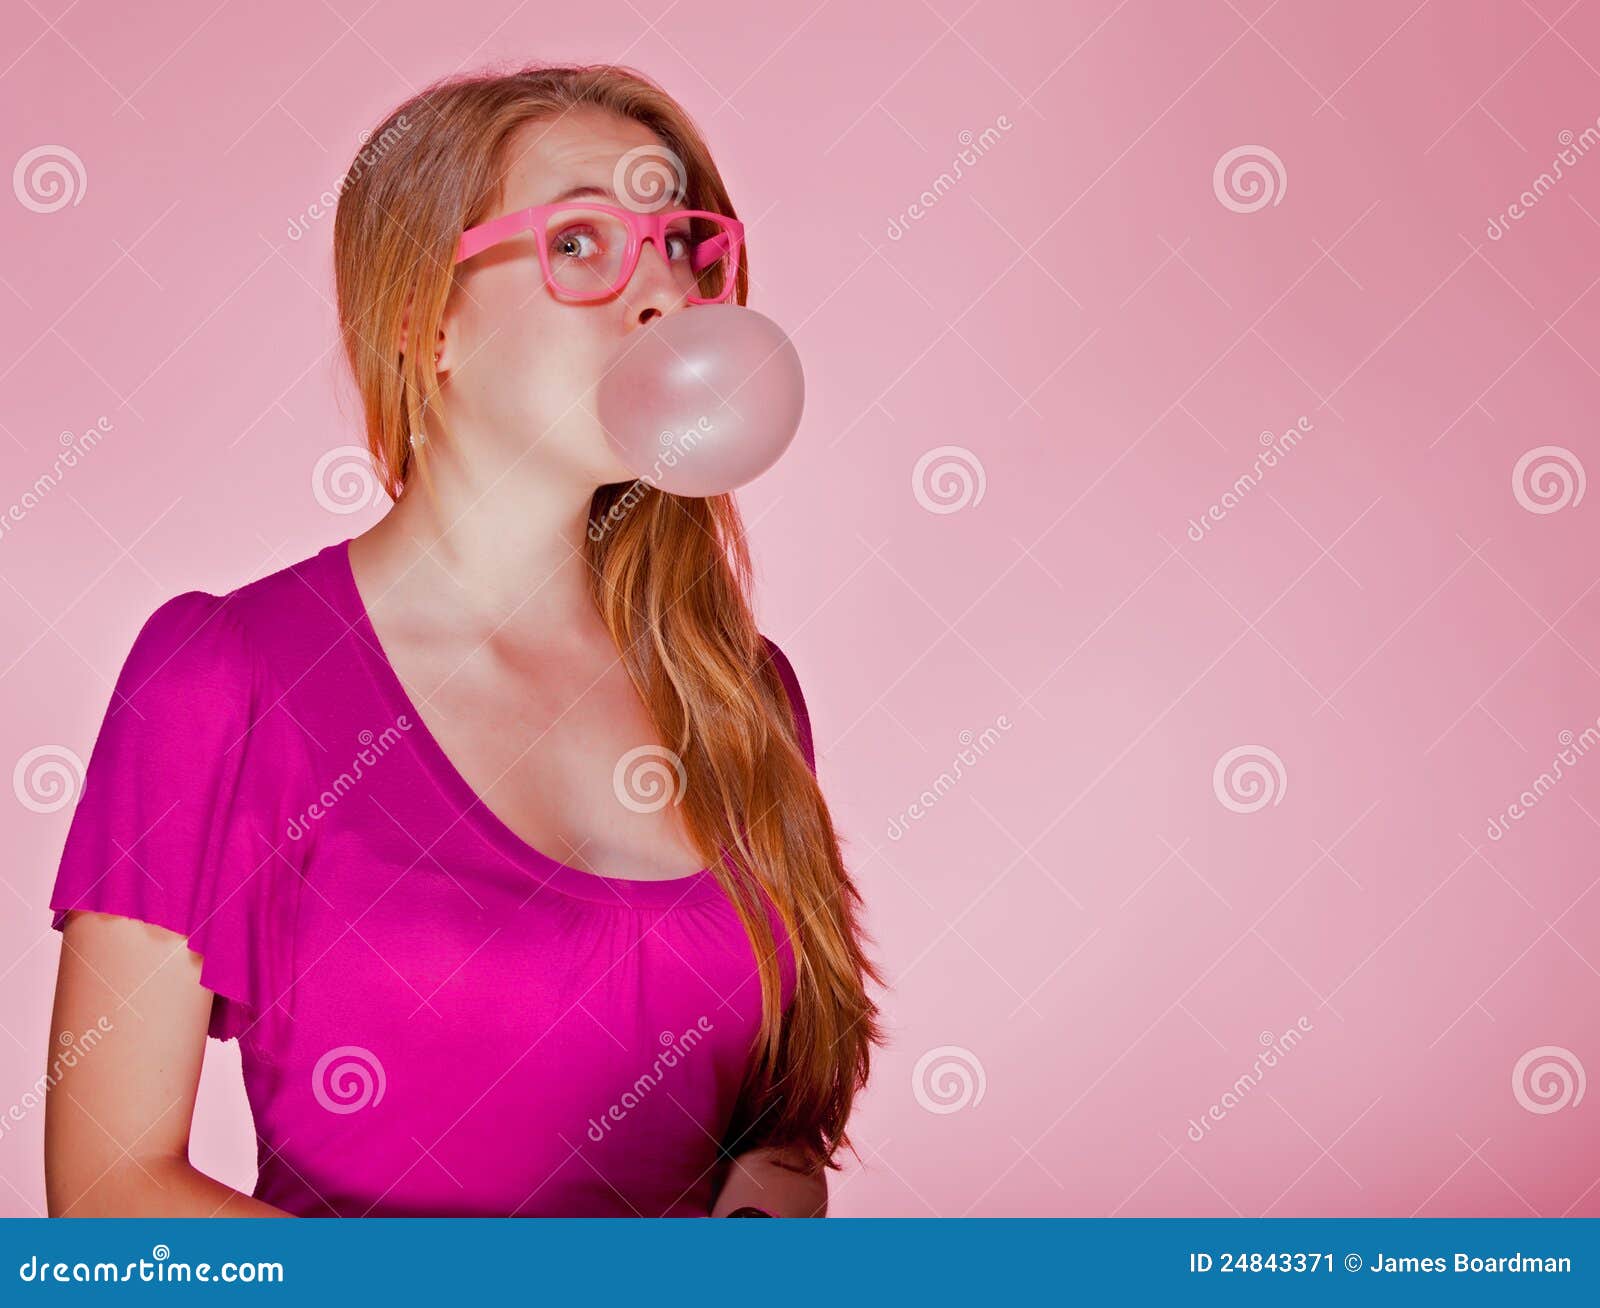 Bubble Gum Blowing Teen Girls Xxx Pics